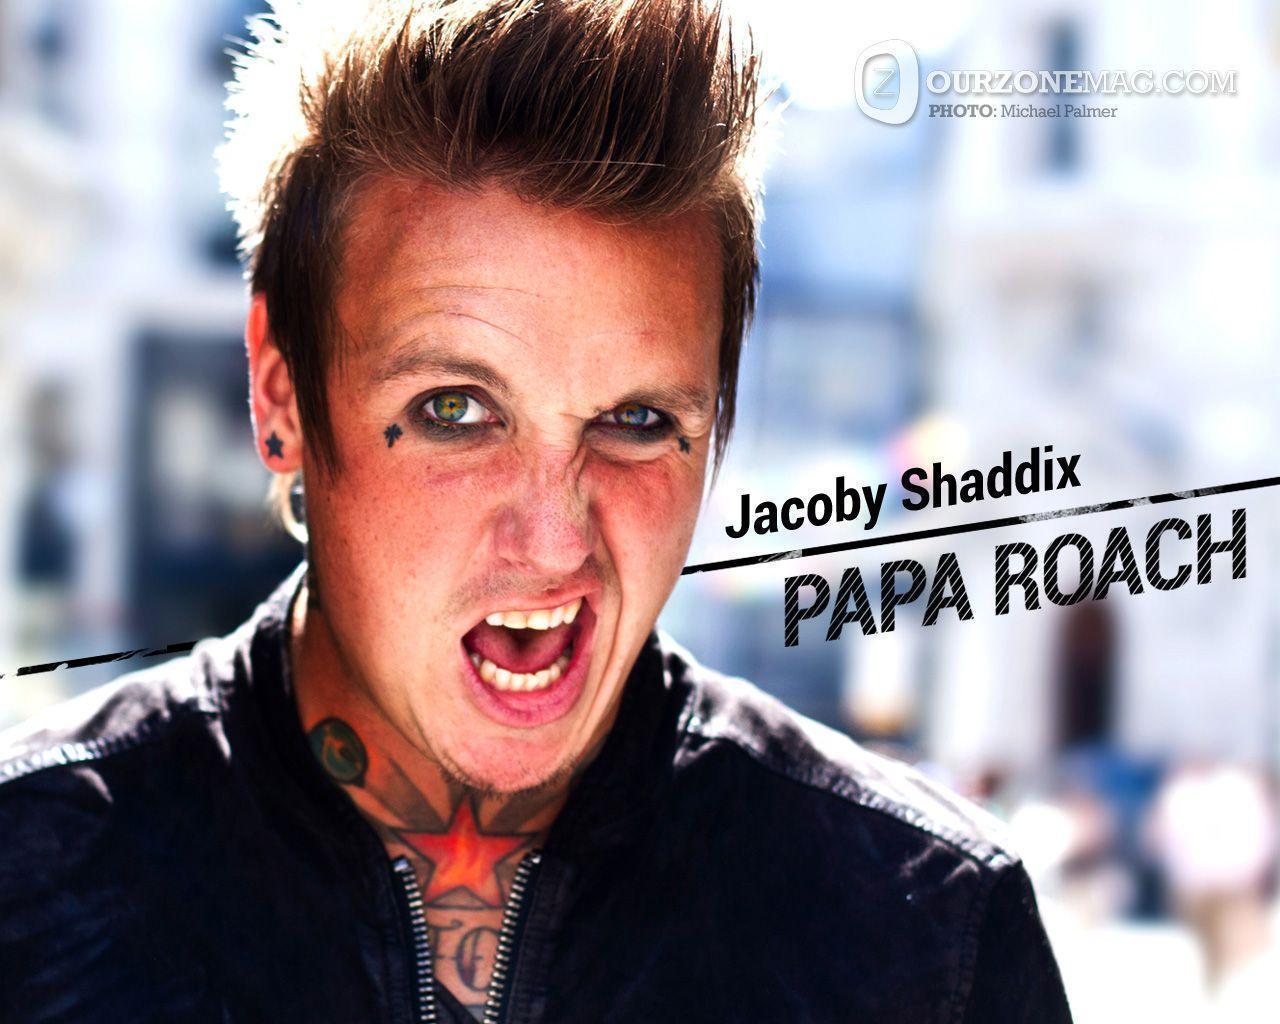 FREE DOWNLOAD: Papa Roach Wallpaper